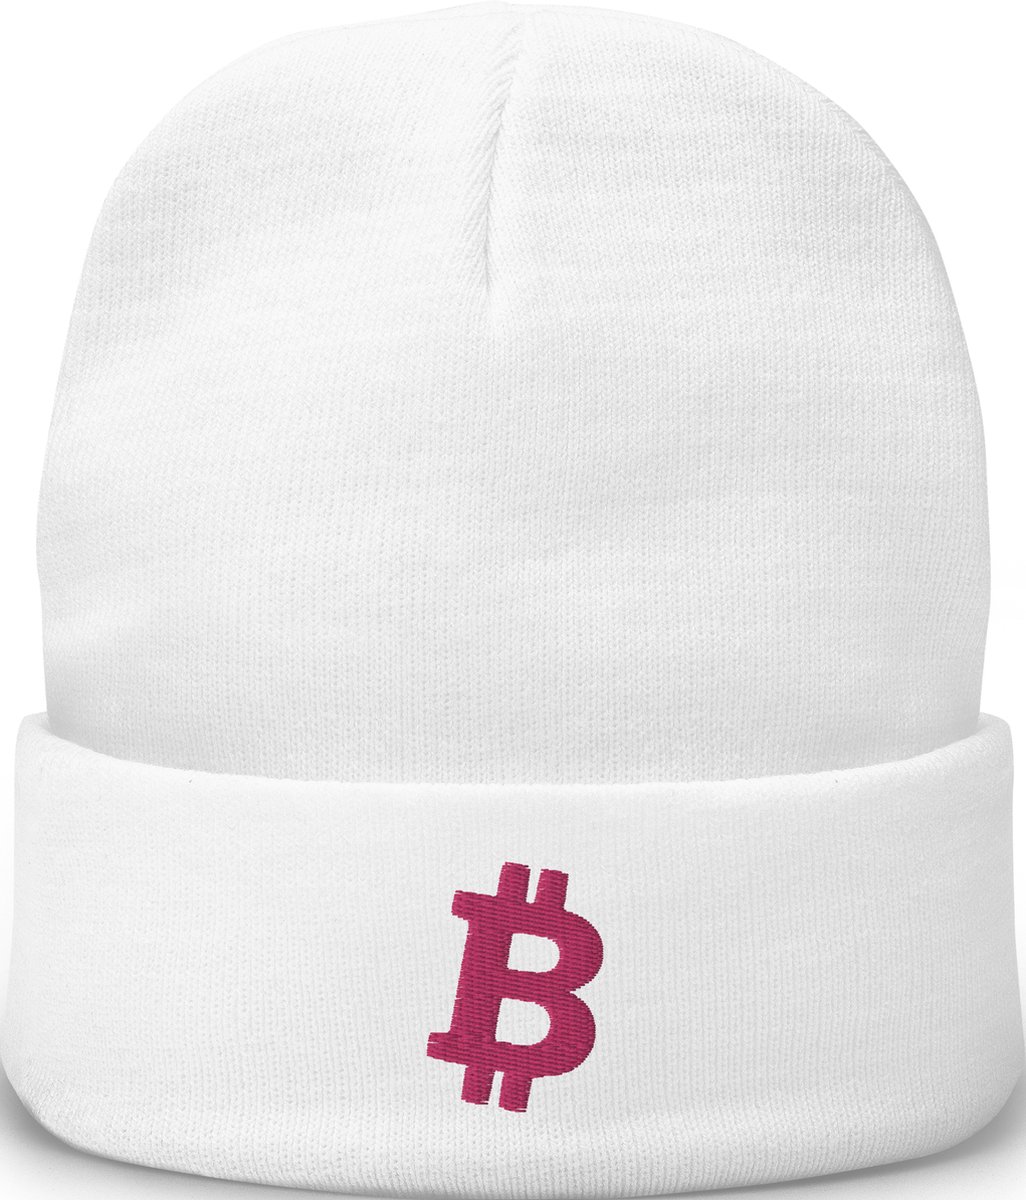 Witte Beanie Winter Muts Met Flamingo Roze Kleurig Geborduurd Bitcoin Logo| Bitcoin cadeau| Crypto cadeau| Bitcoin Muts| Crypto Muts| Bitcoin Beanie| Crypto Beanie| Bitcoin Merch| Crypto Merch| Bitcoin Kleding| Crypto Kleding